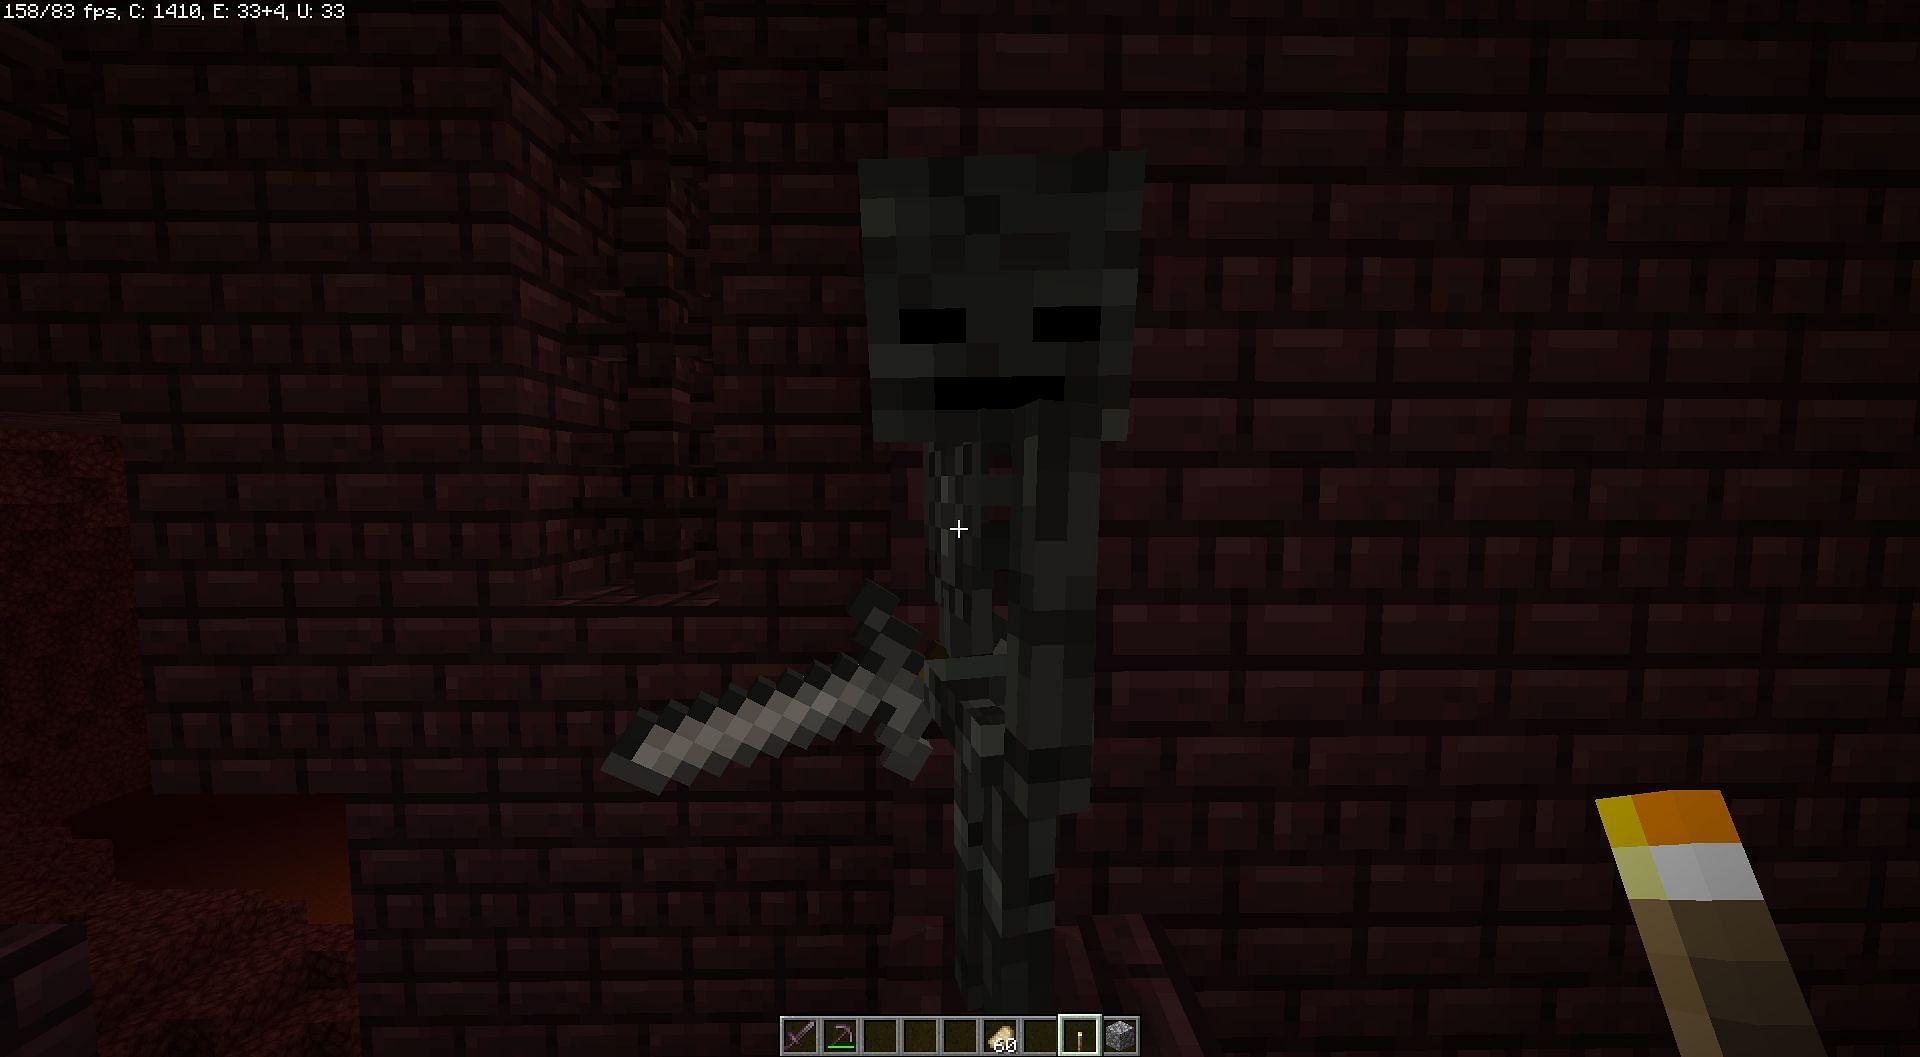 Wither skeleton (Image via Minecraft)